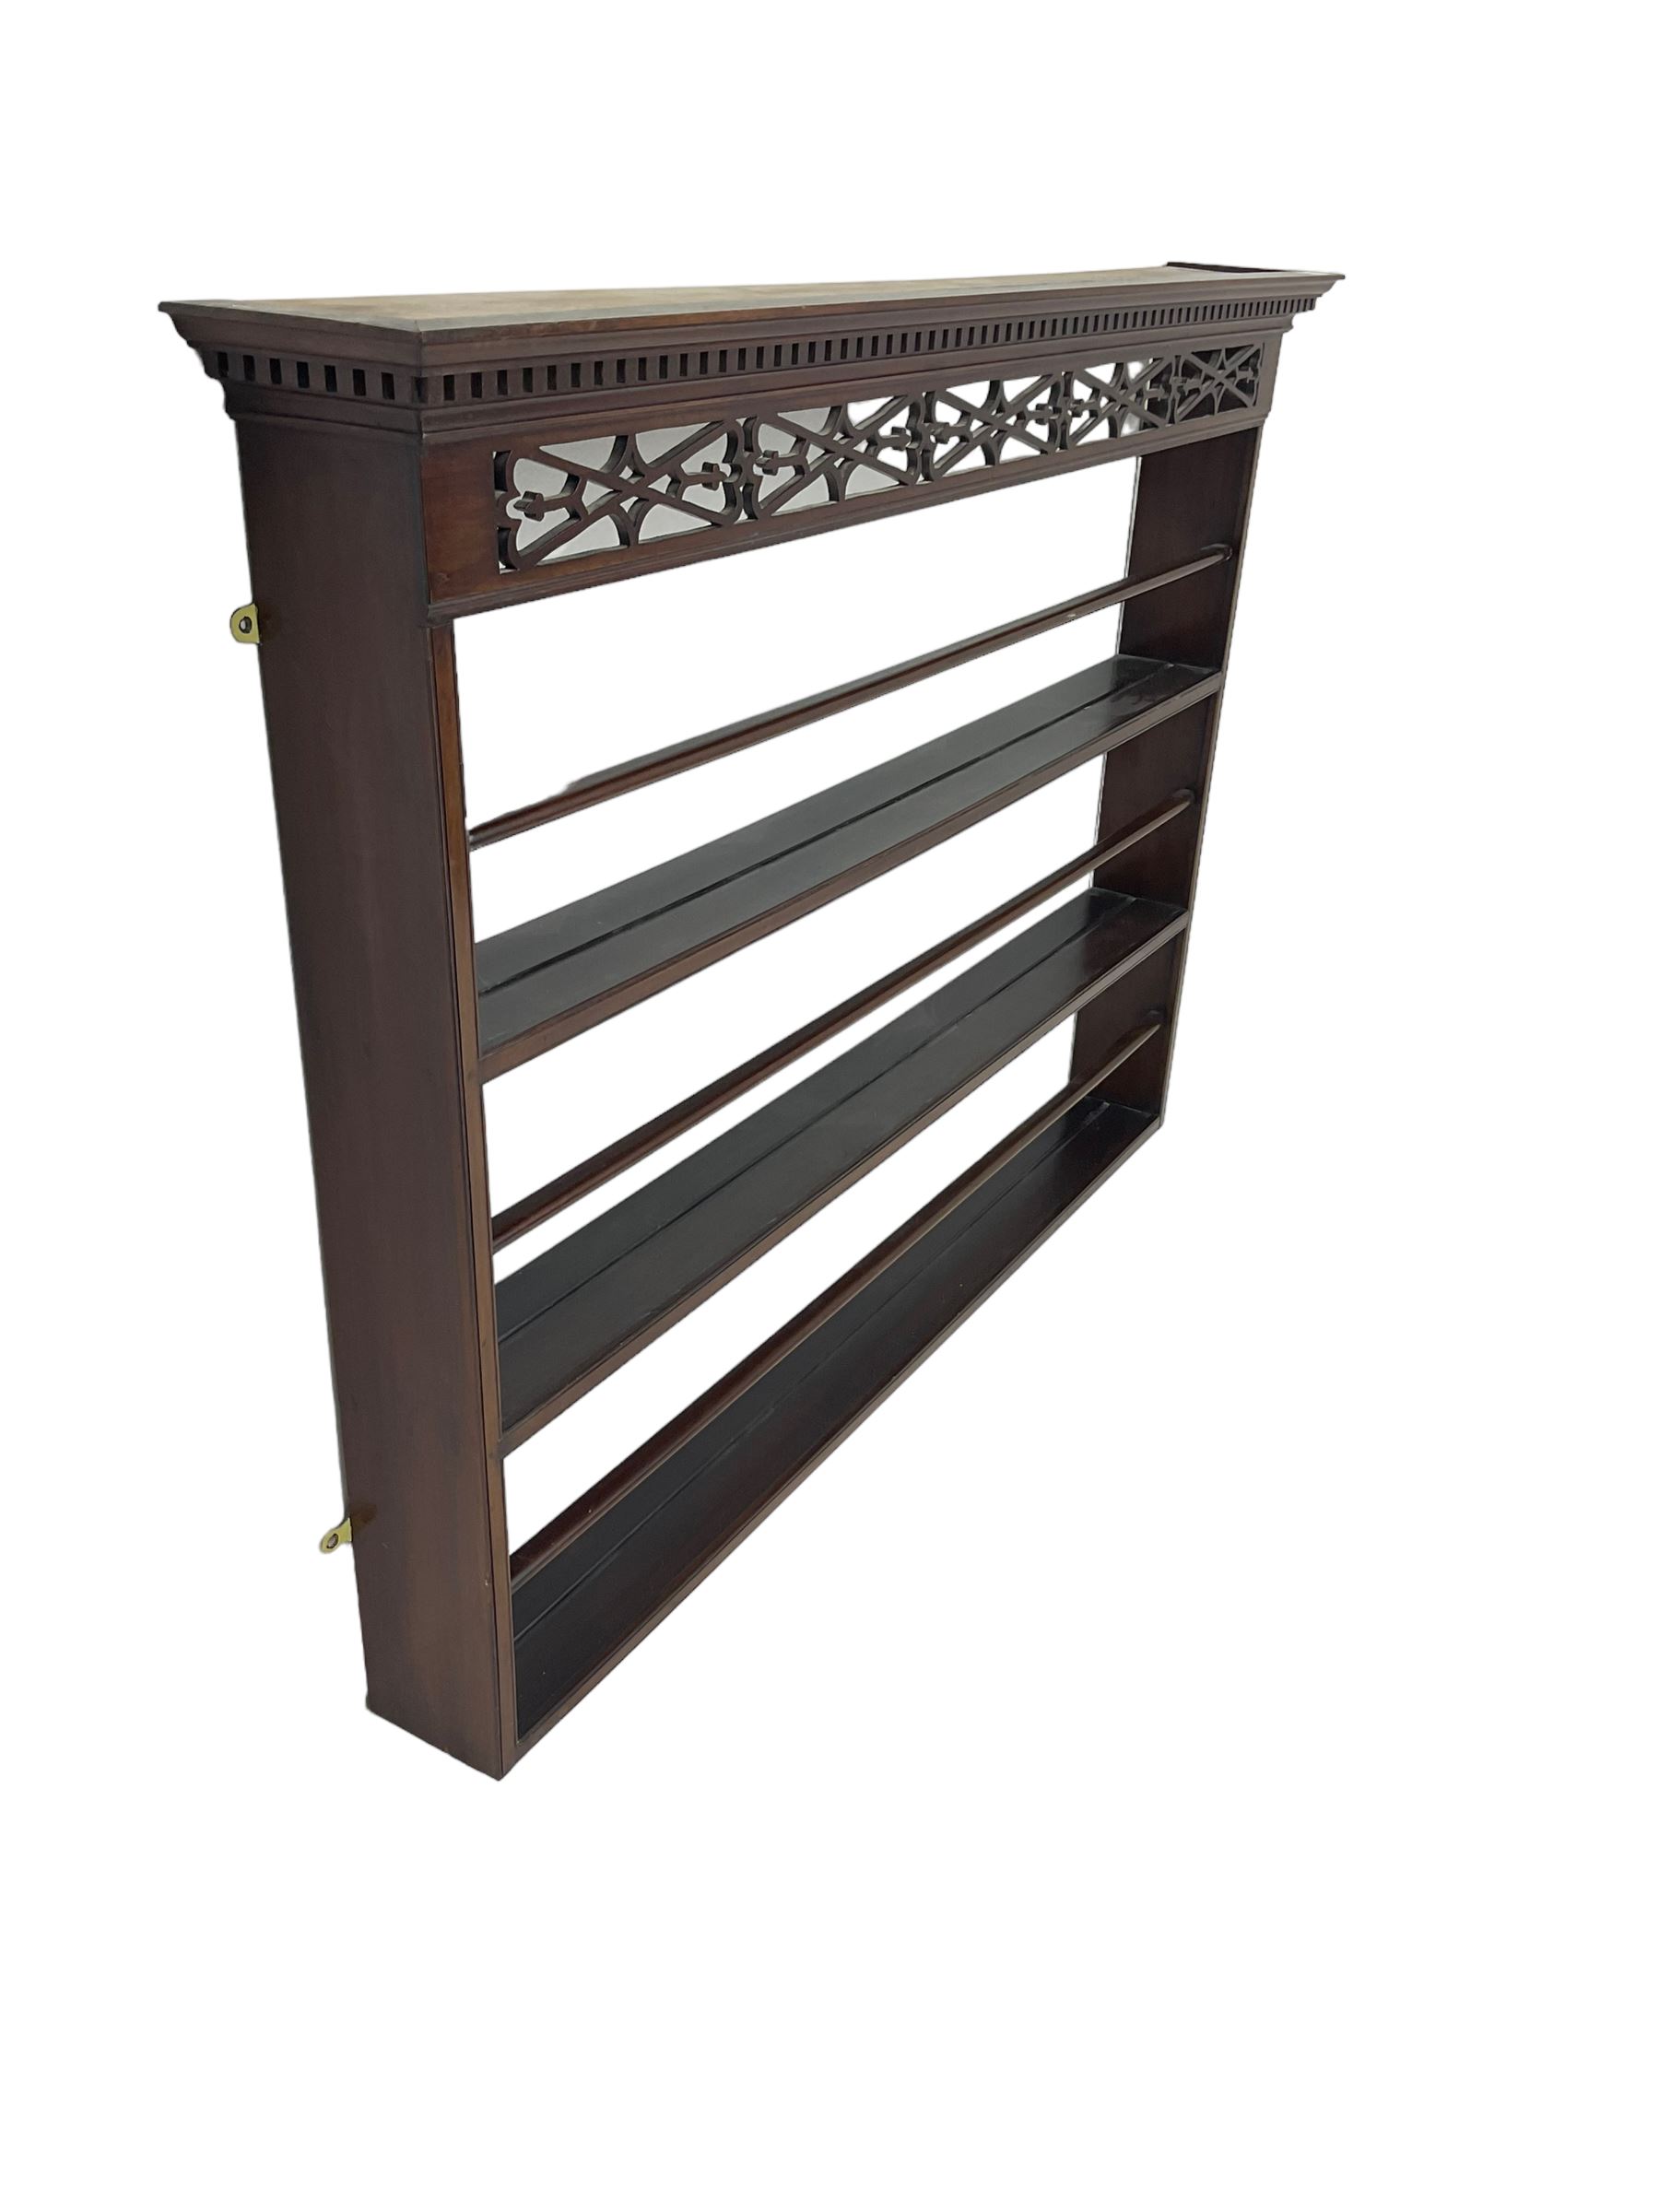 Chippendale design mahogany three-tier plate rack